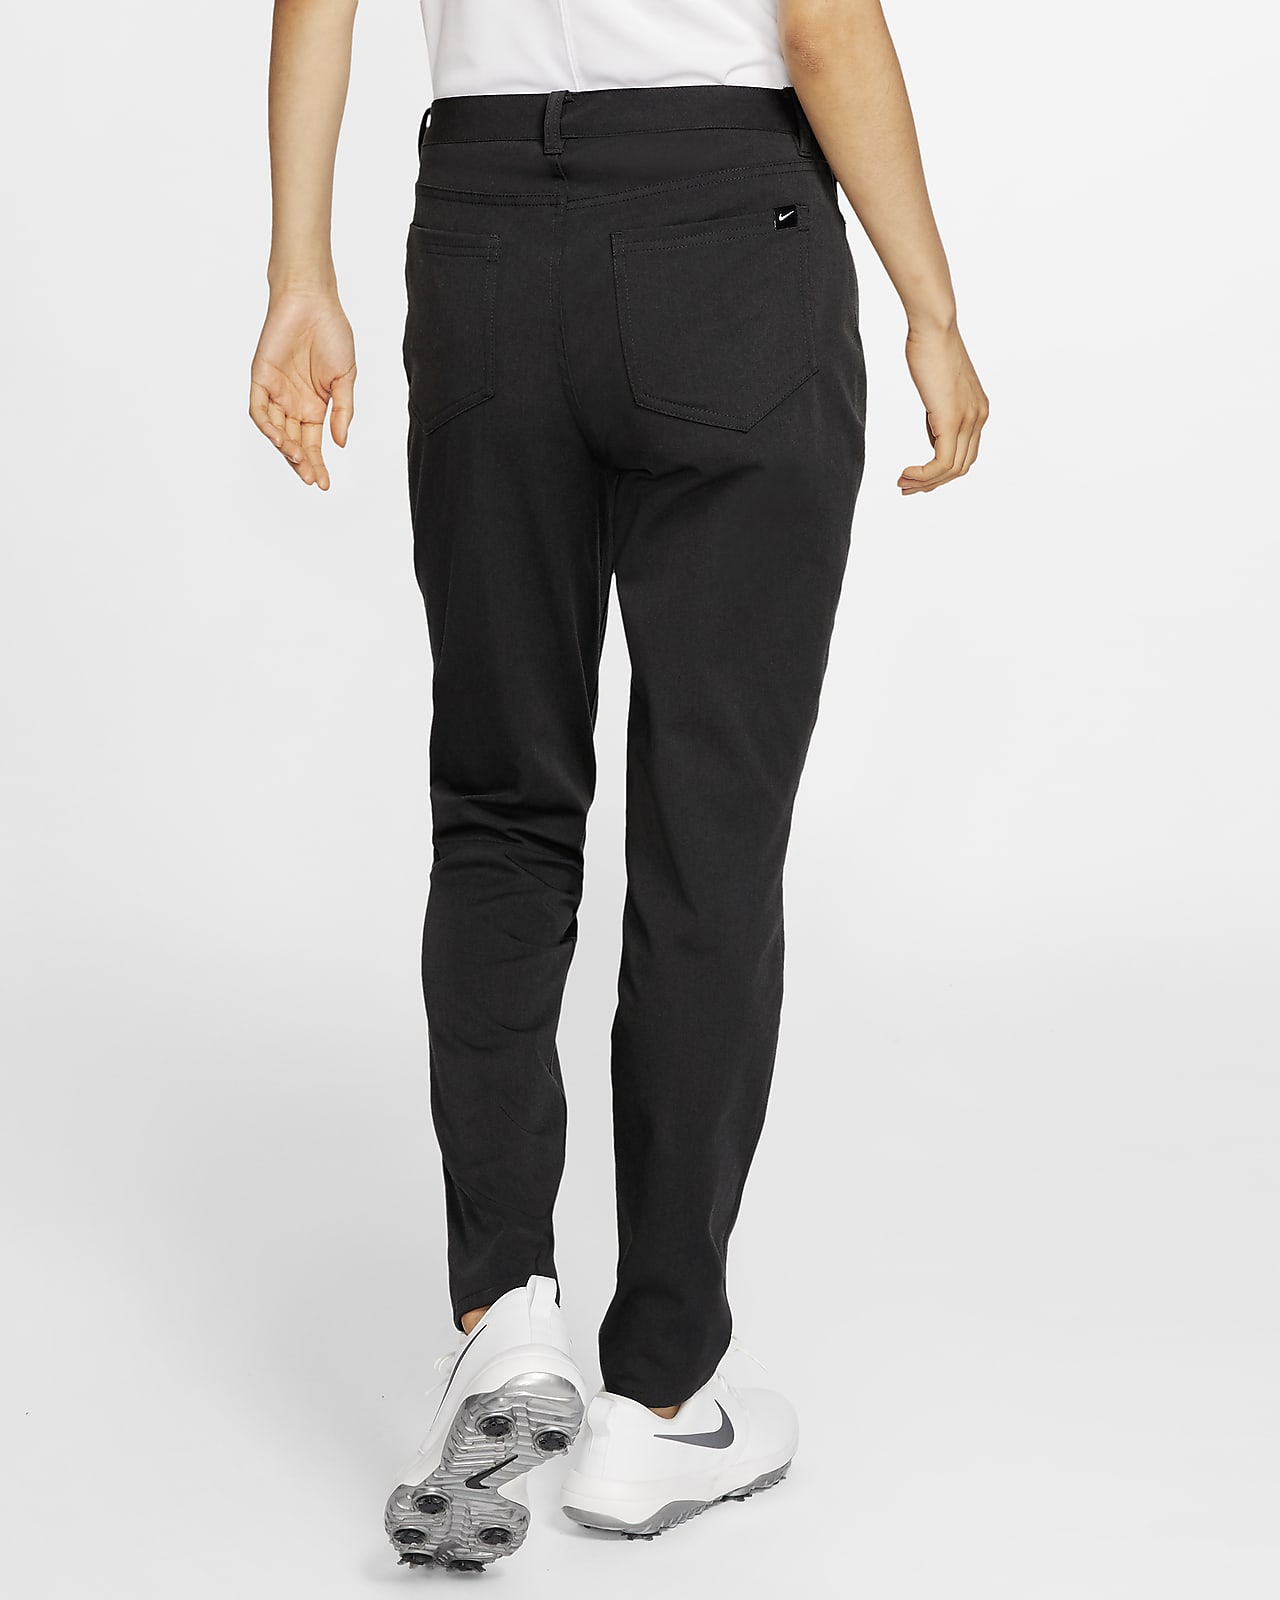 Nike Women's Slim Fit Golf Trousers